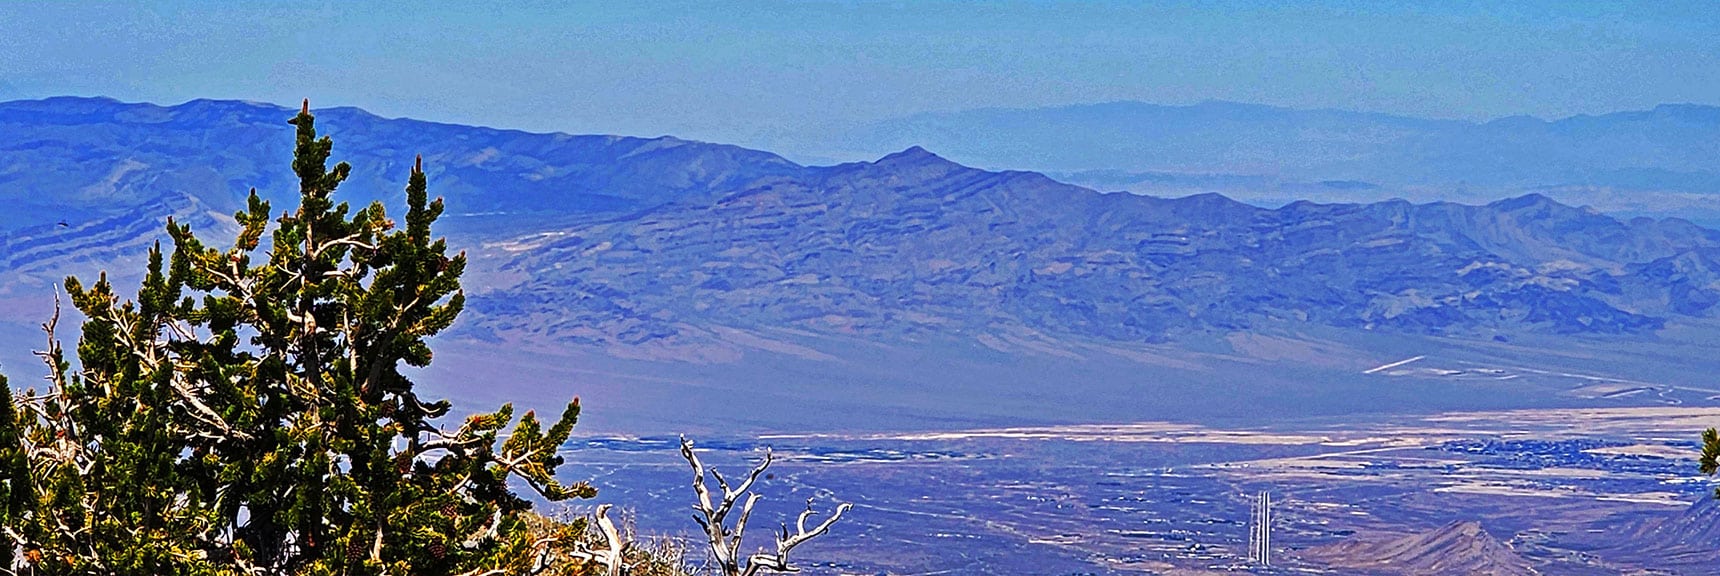 Gass Peak Above Northern Vegas Valley. Triangle-Shaped Gun Range Below. | Fletcher Canyon to Harris Mountain Summit | Mt Charleston Wilderness, Nevada